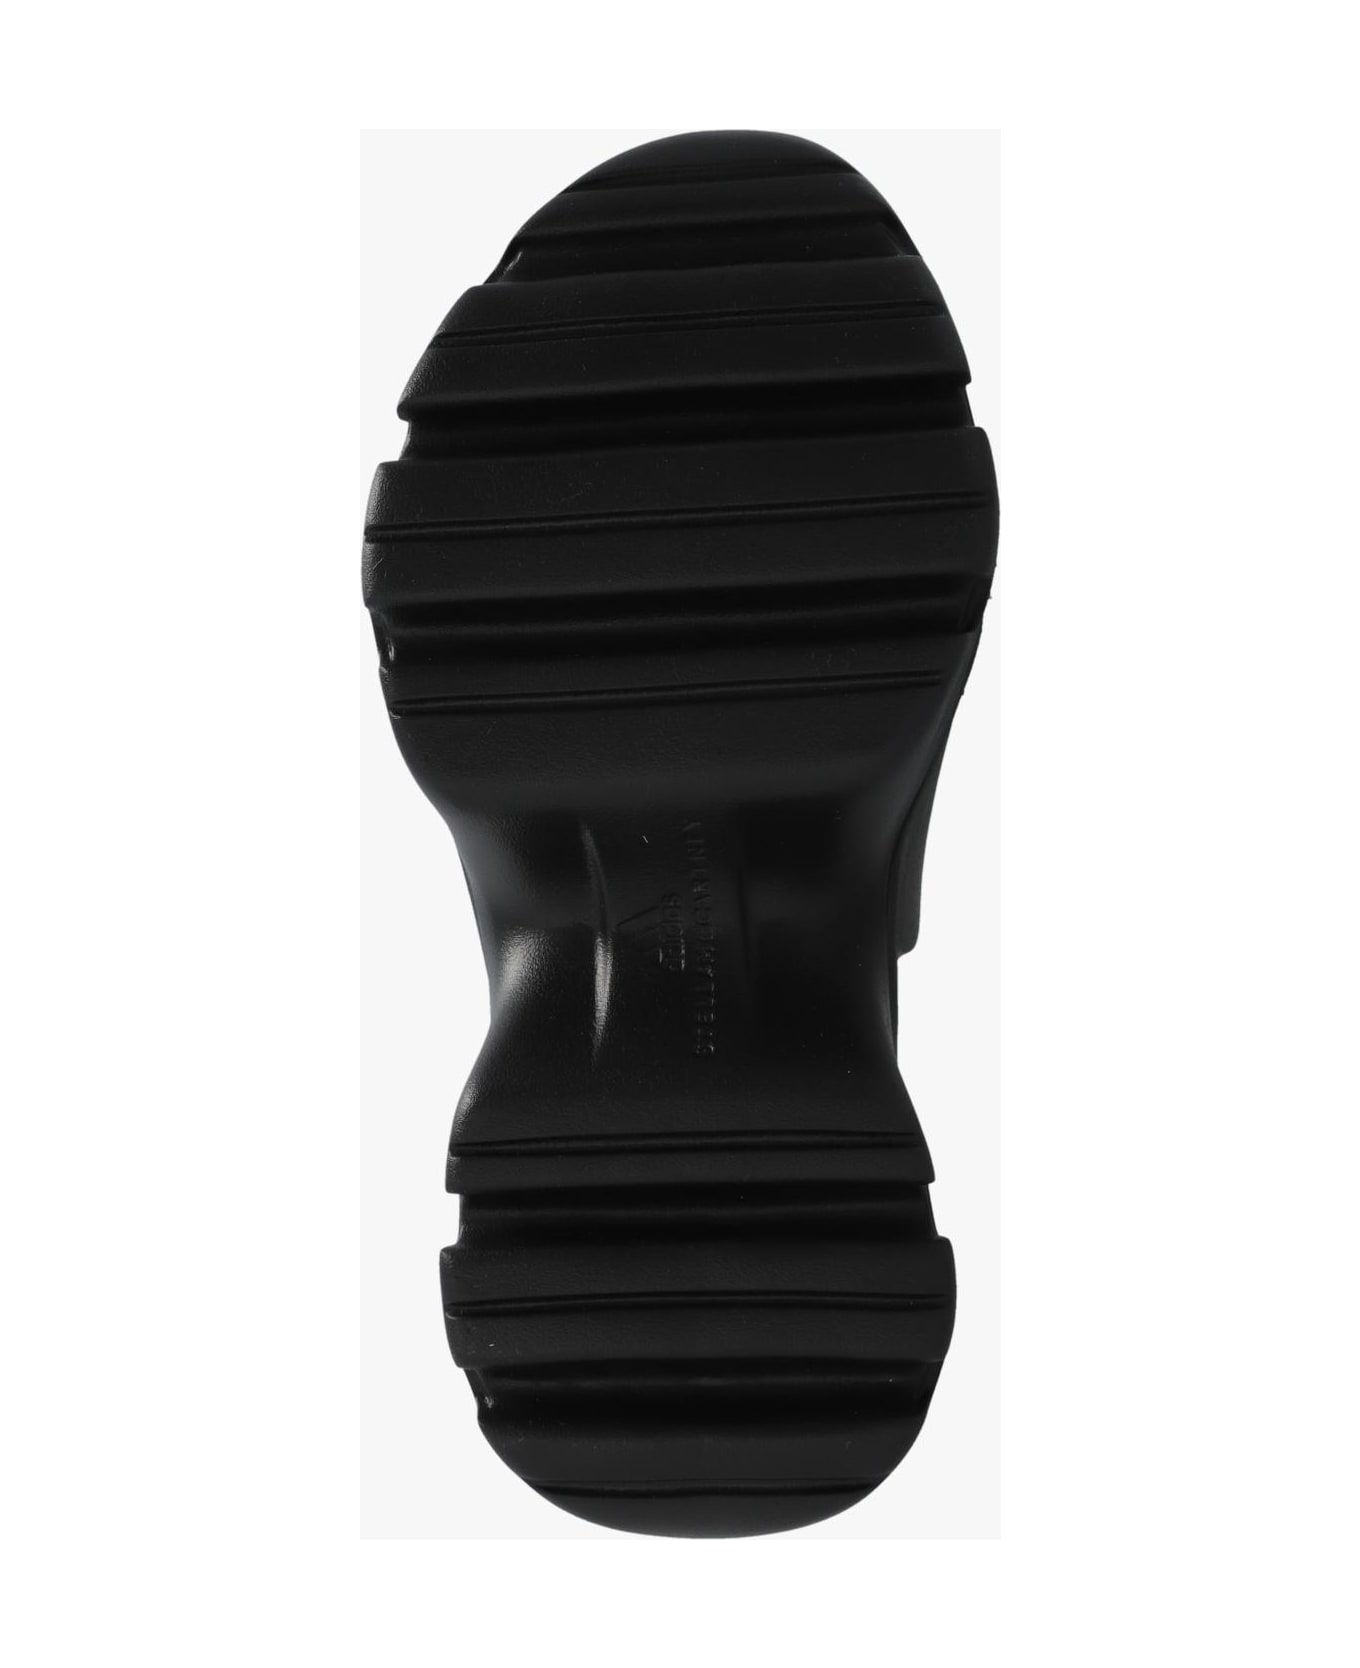 Adidas by Stella McCartney Platform Slides - Core Black/core Black/core Black サンダル